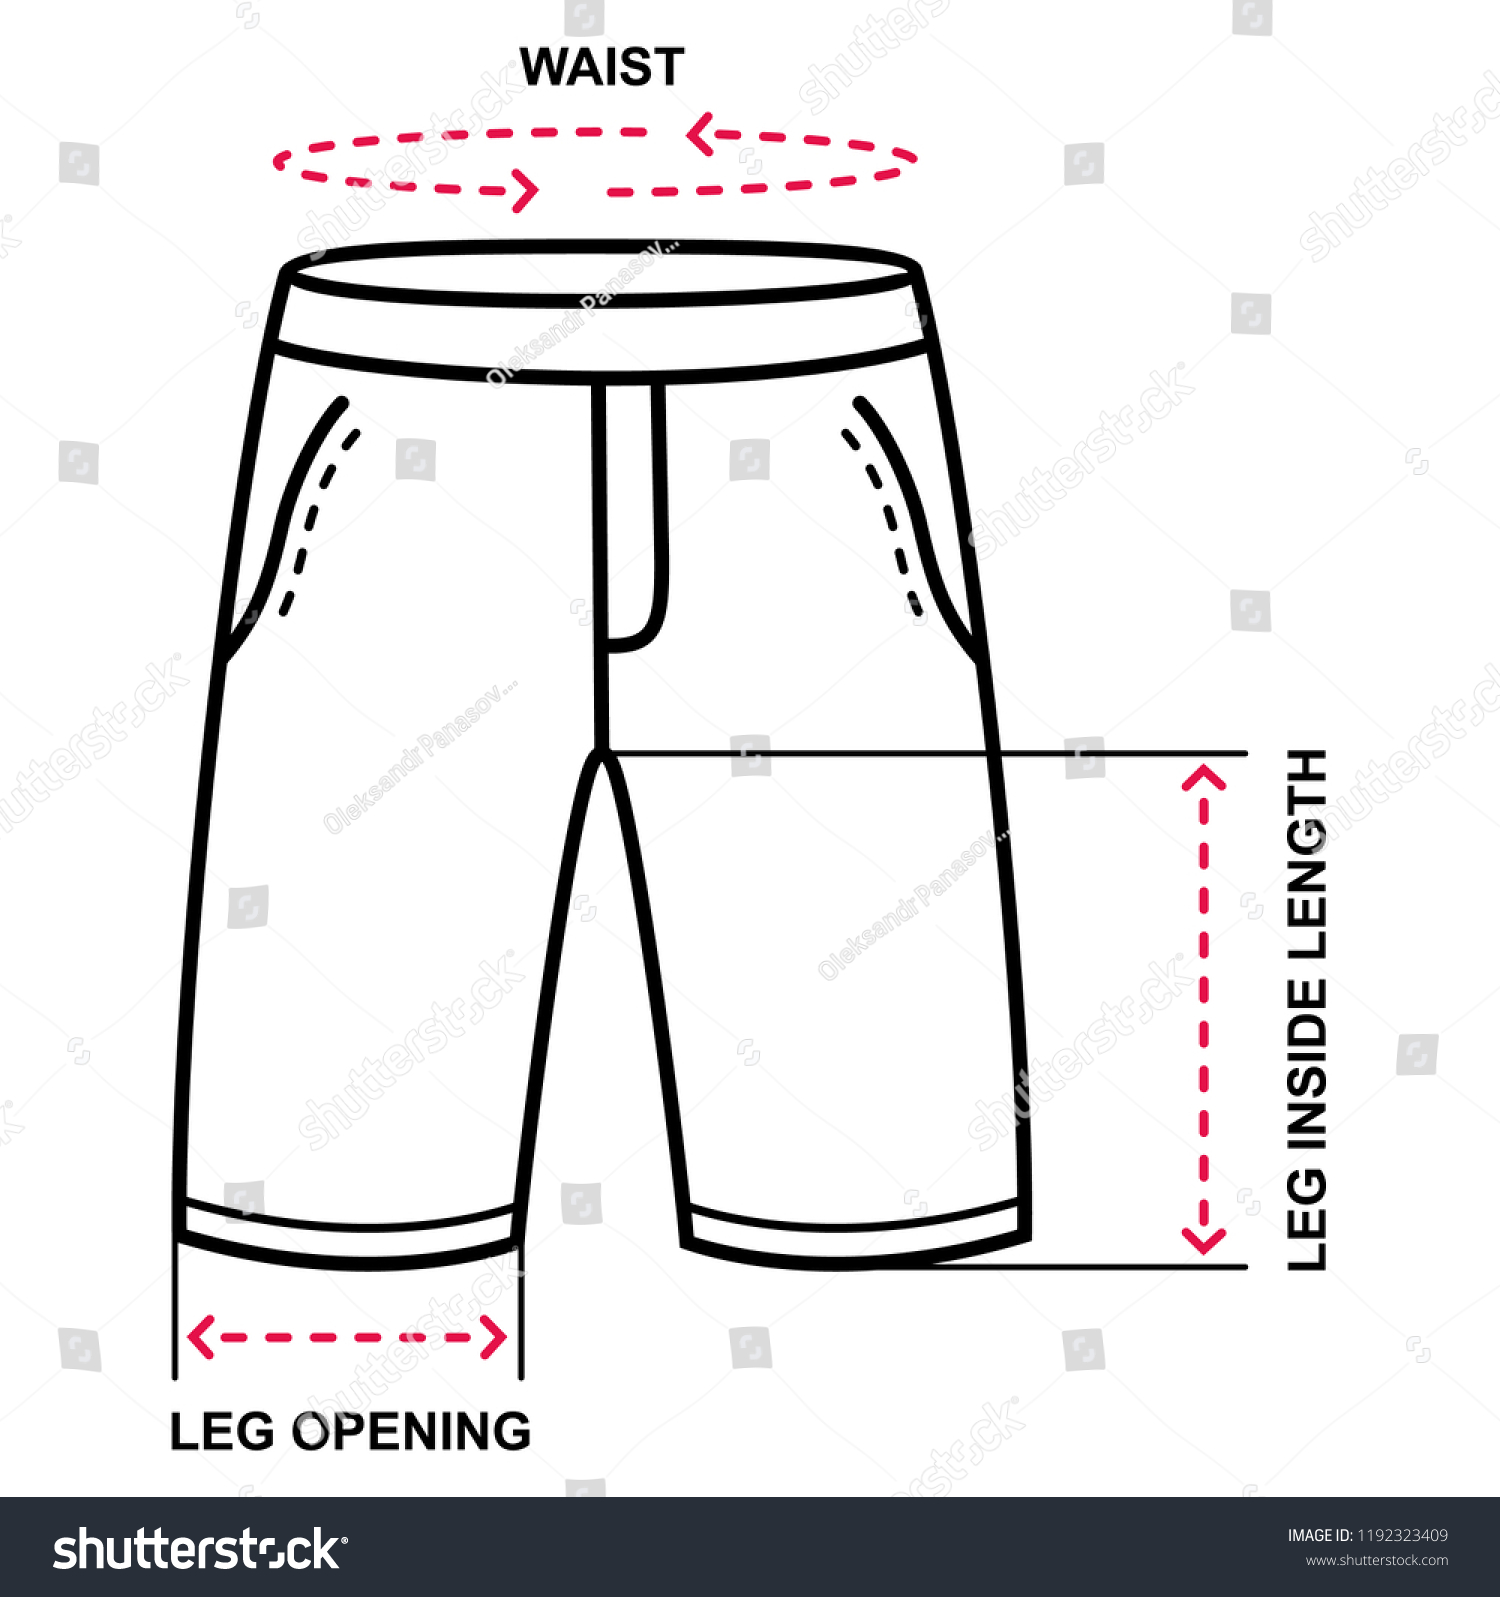 Running Shorts Size Chart